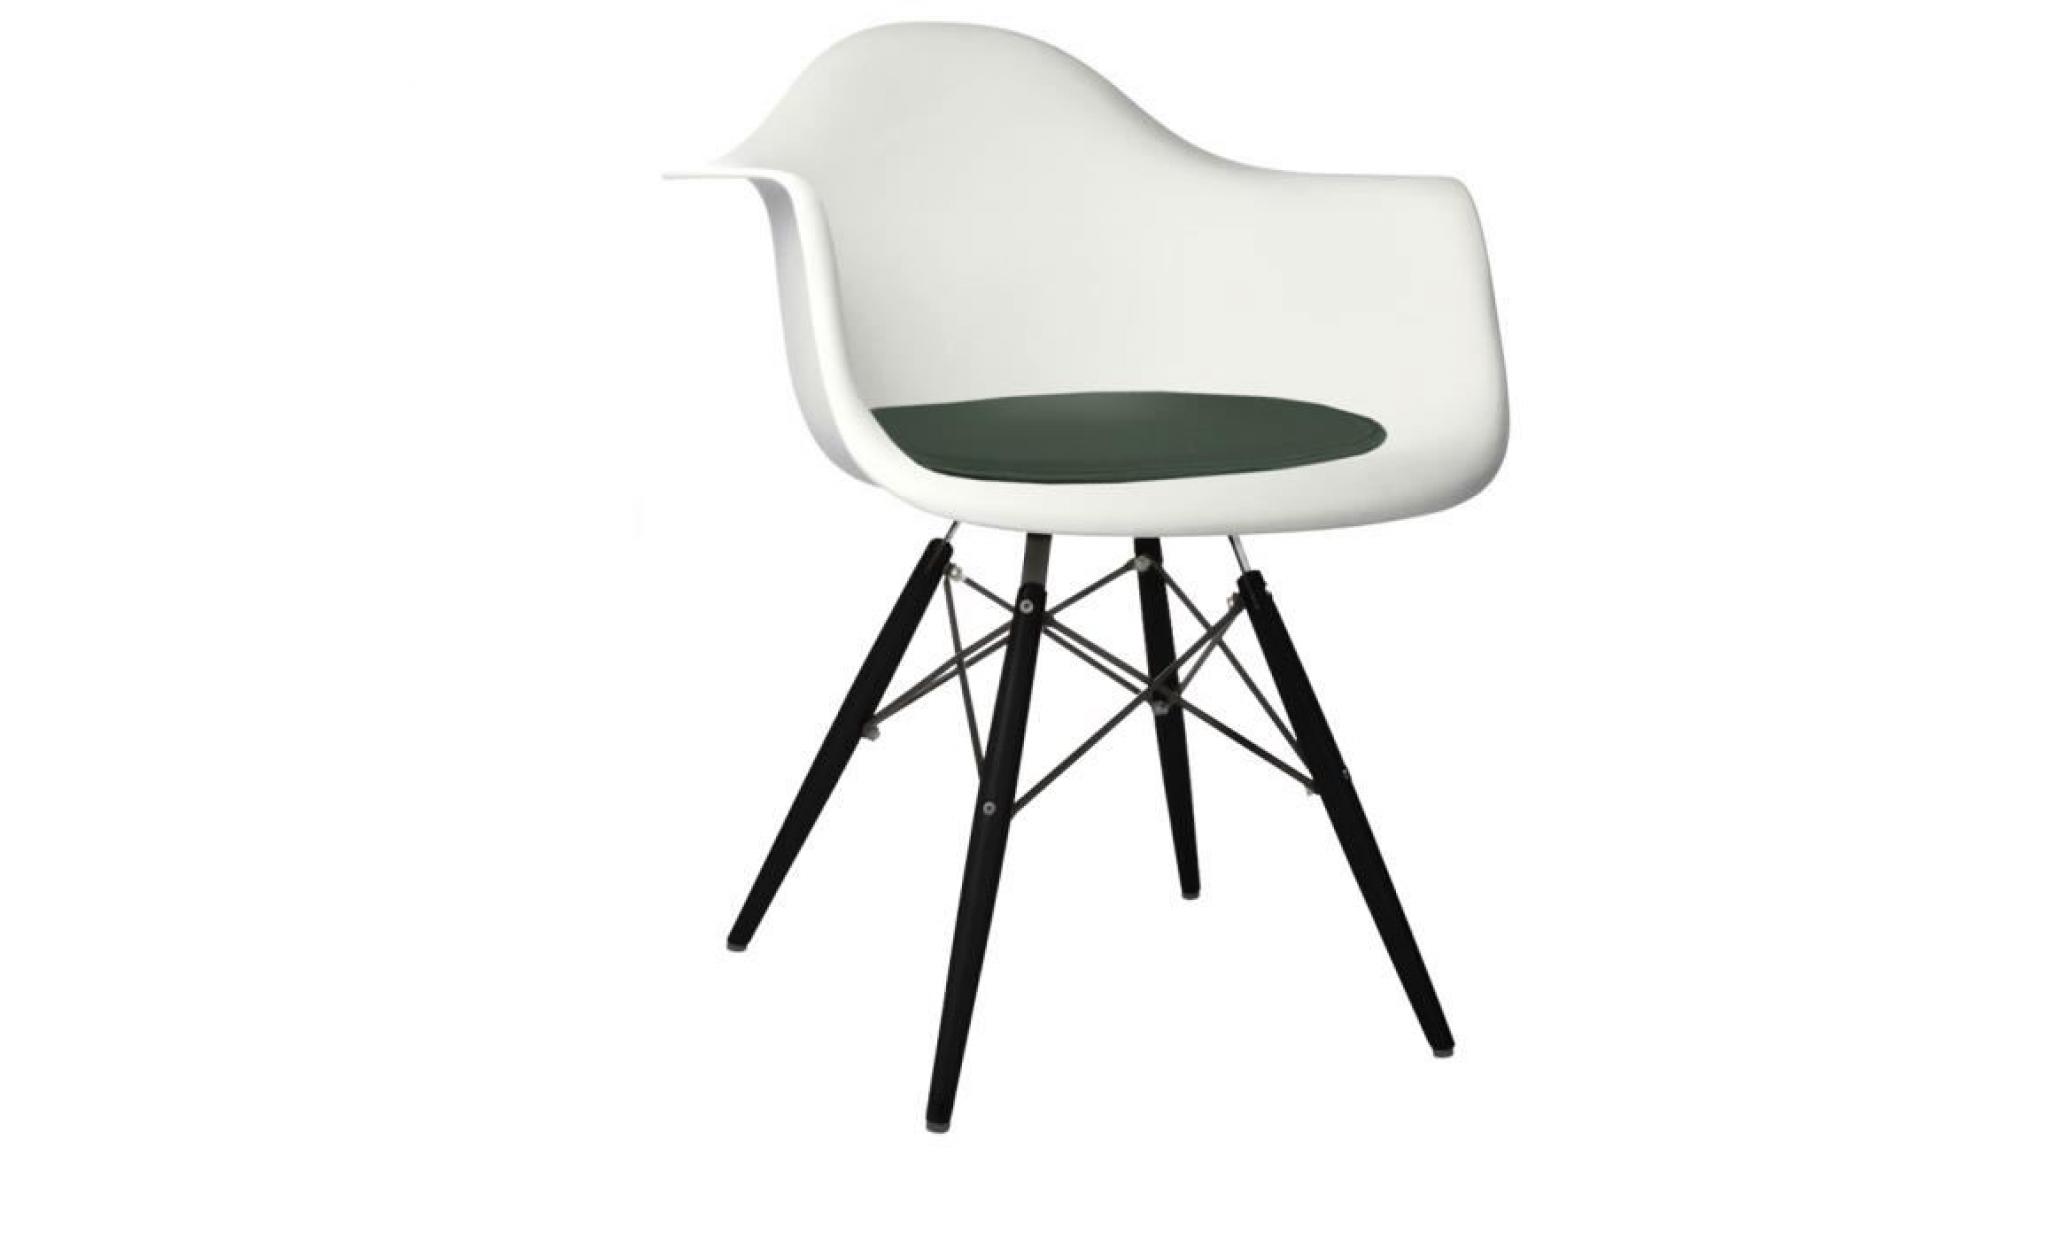 1 x fauteuil design blanc scandinave  vert kaki pieds: bois naturel decopresto dp dawclwh vk 1